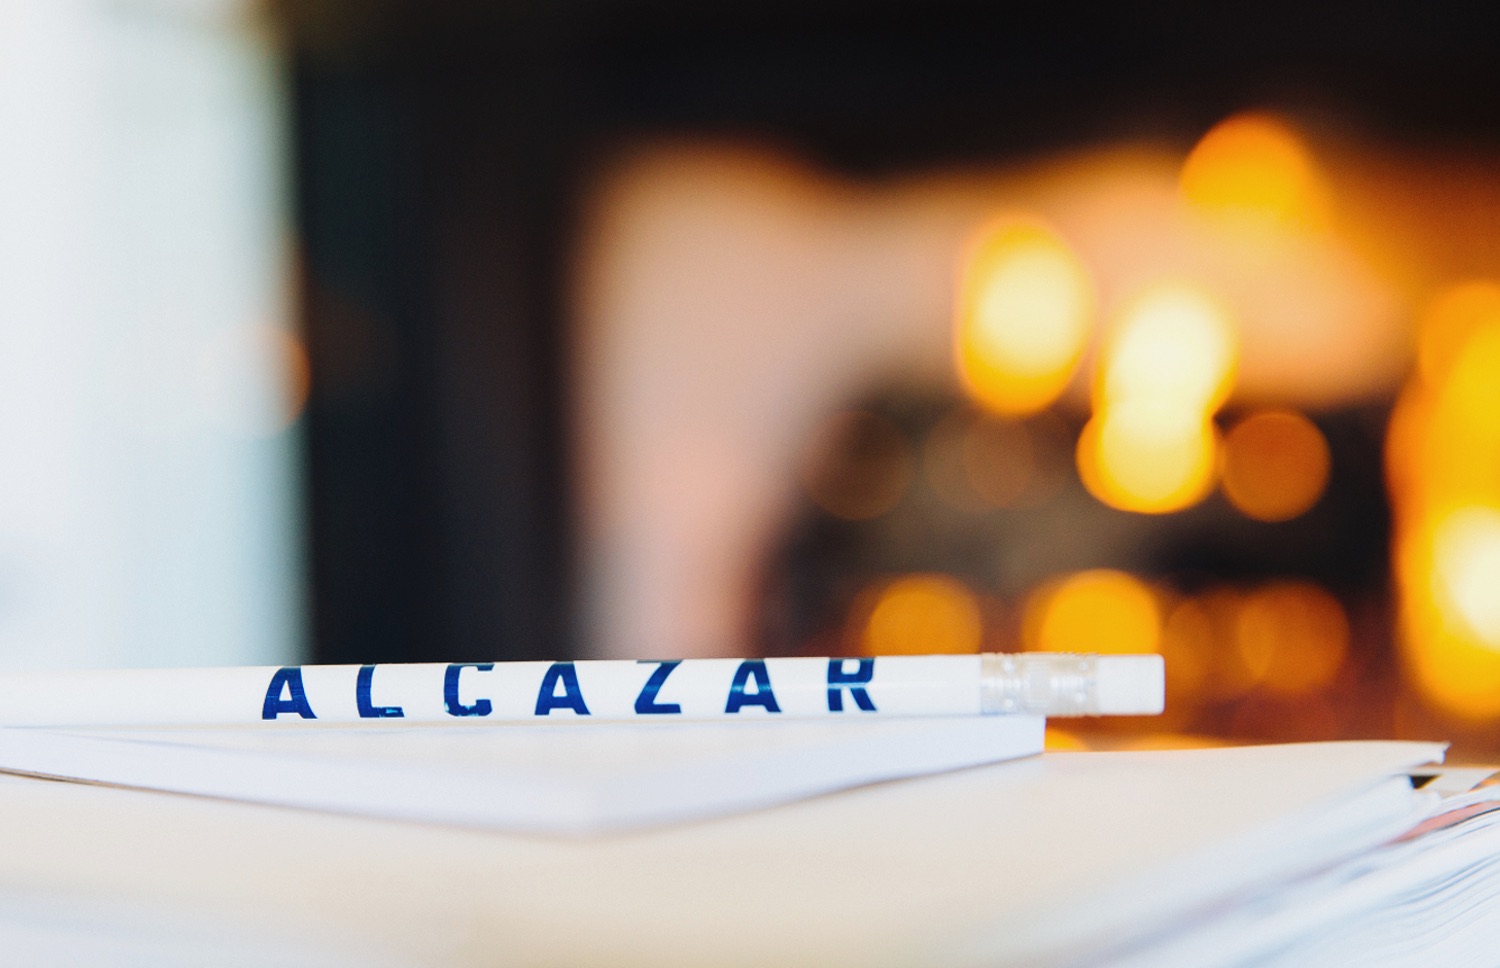 Alcazar Hotel Stationary with Fireplace Background